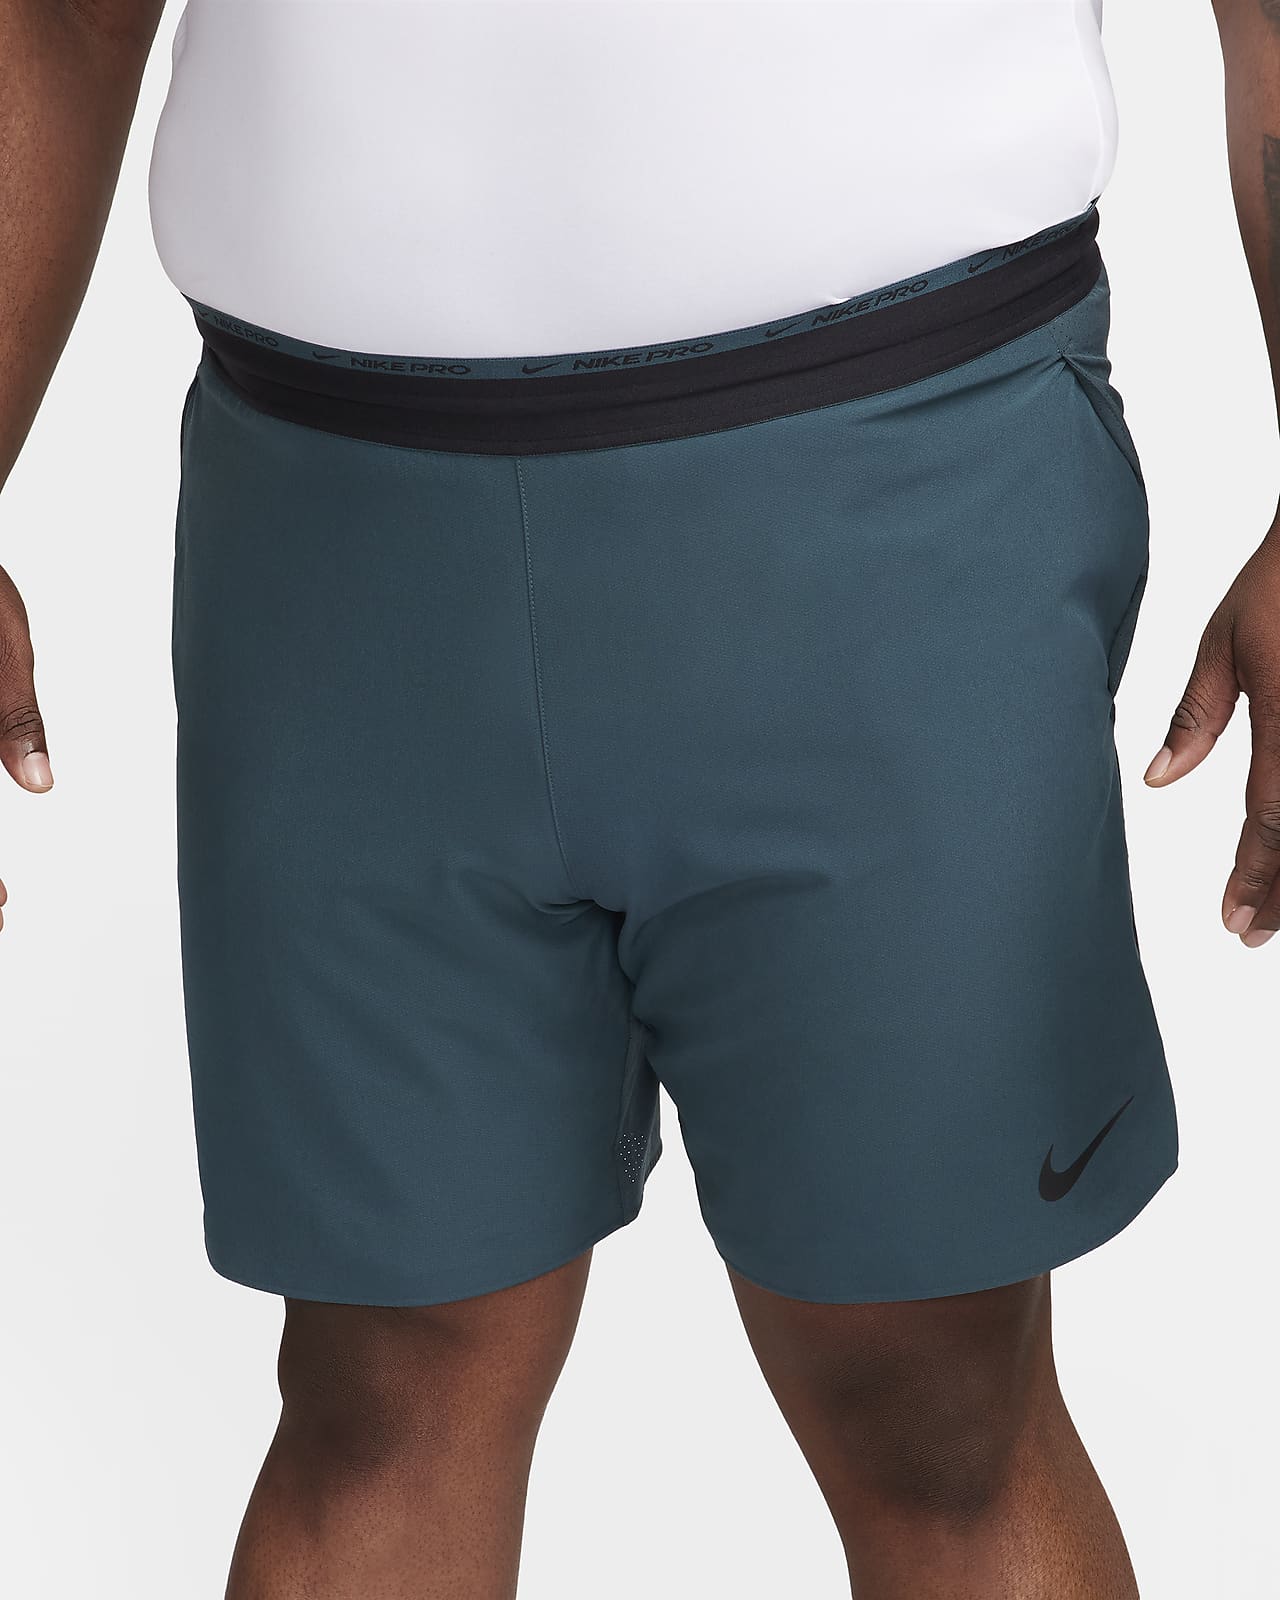 Nike Dri-FIT Flex Rep Pro Collection Men's 8 Unlined Training Shorts